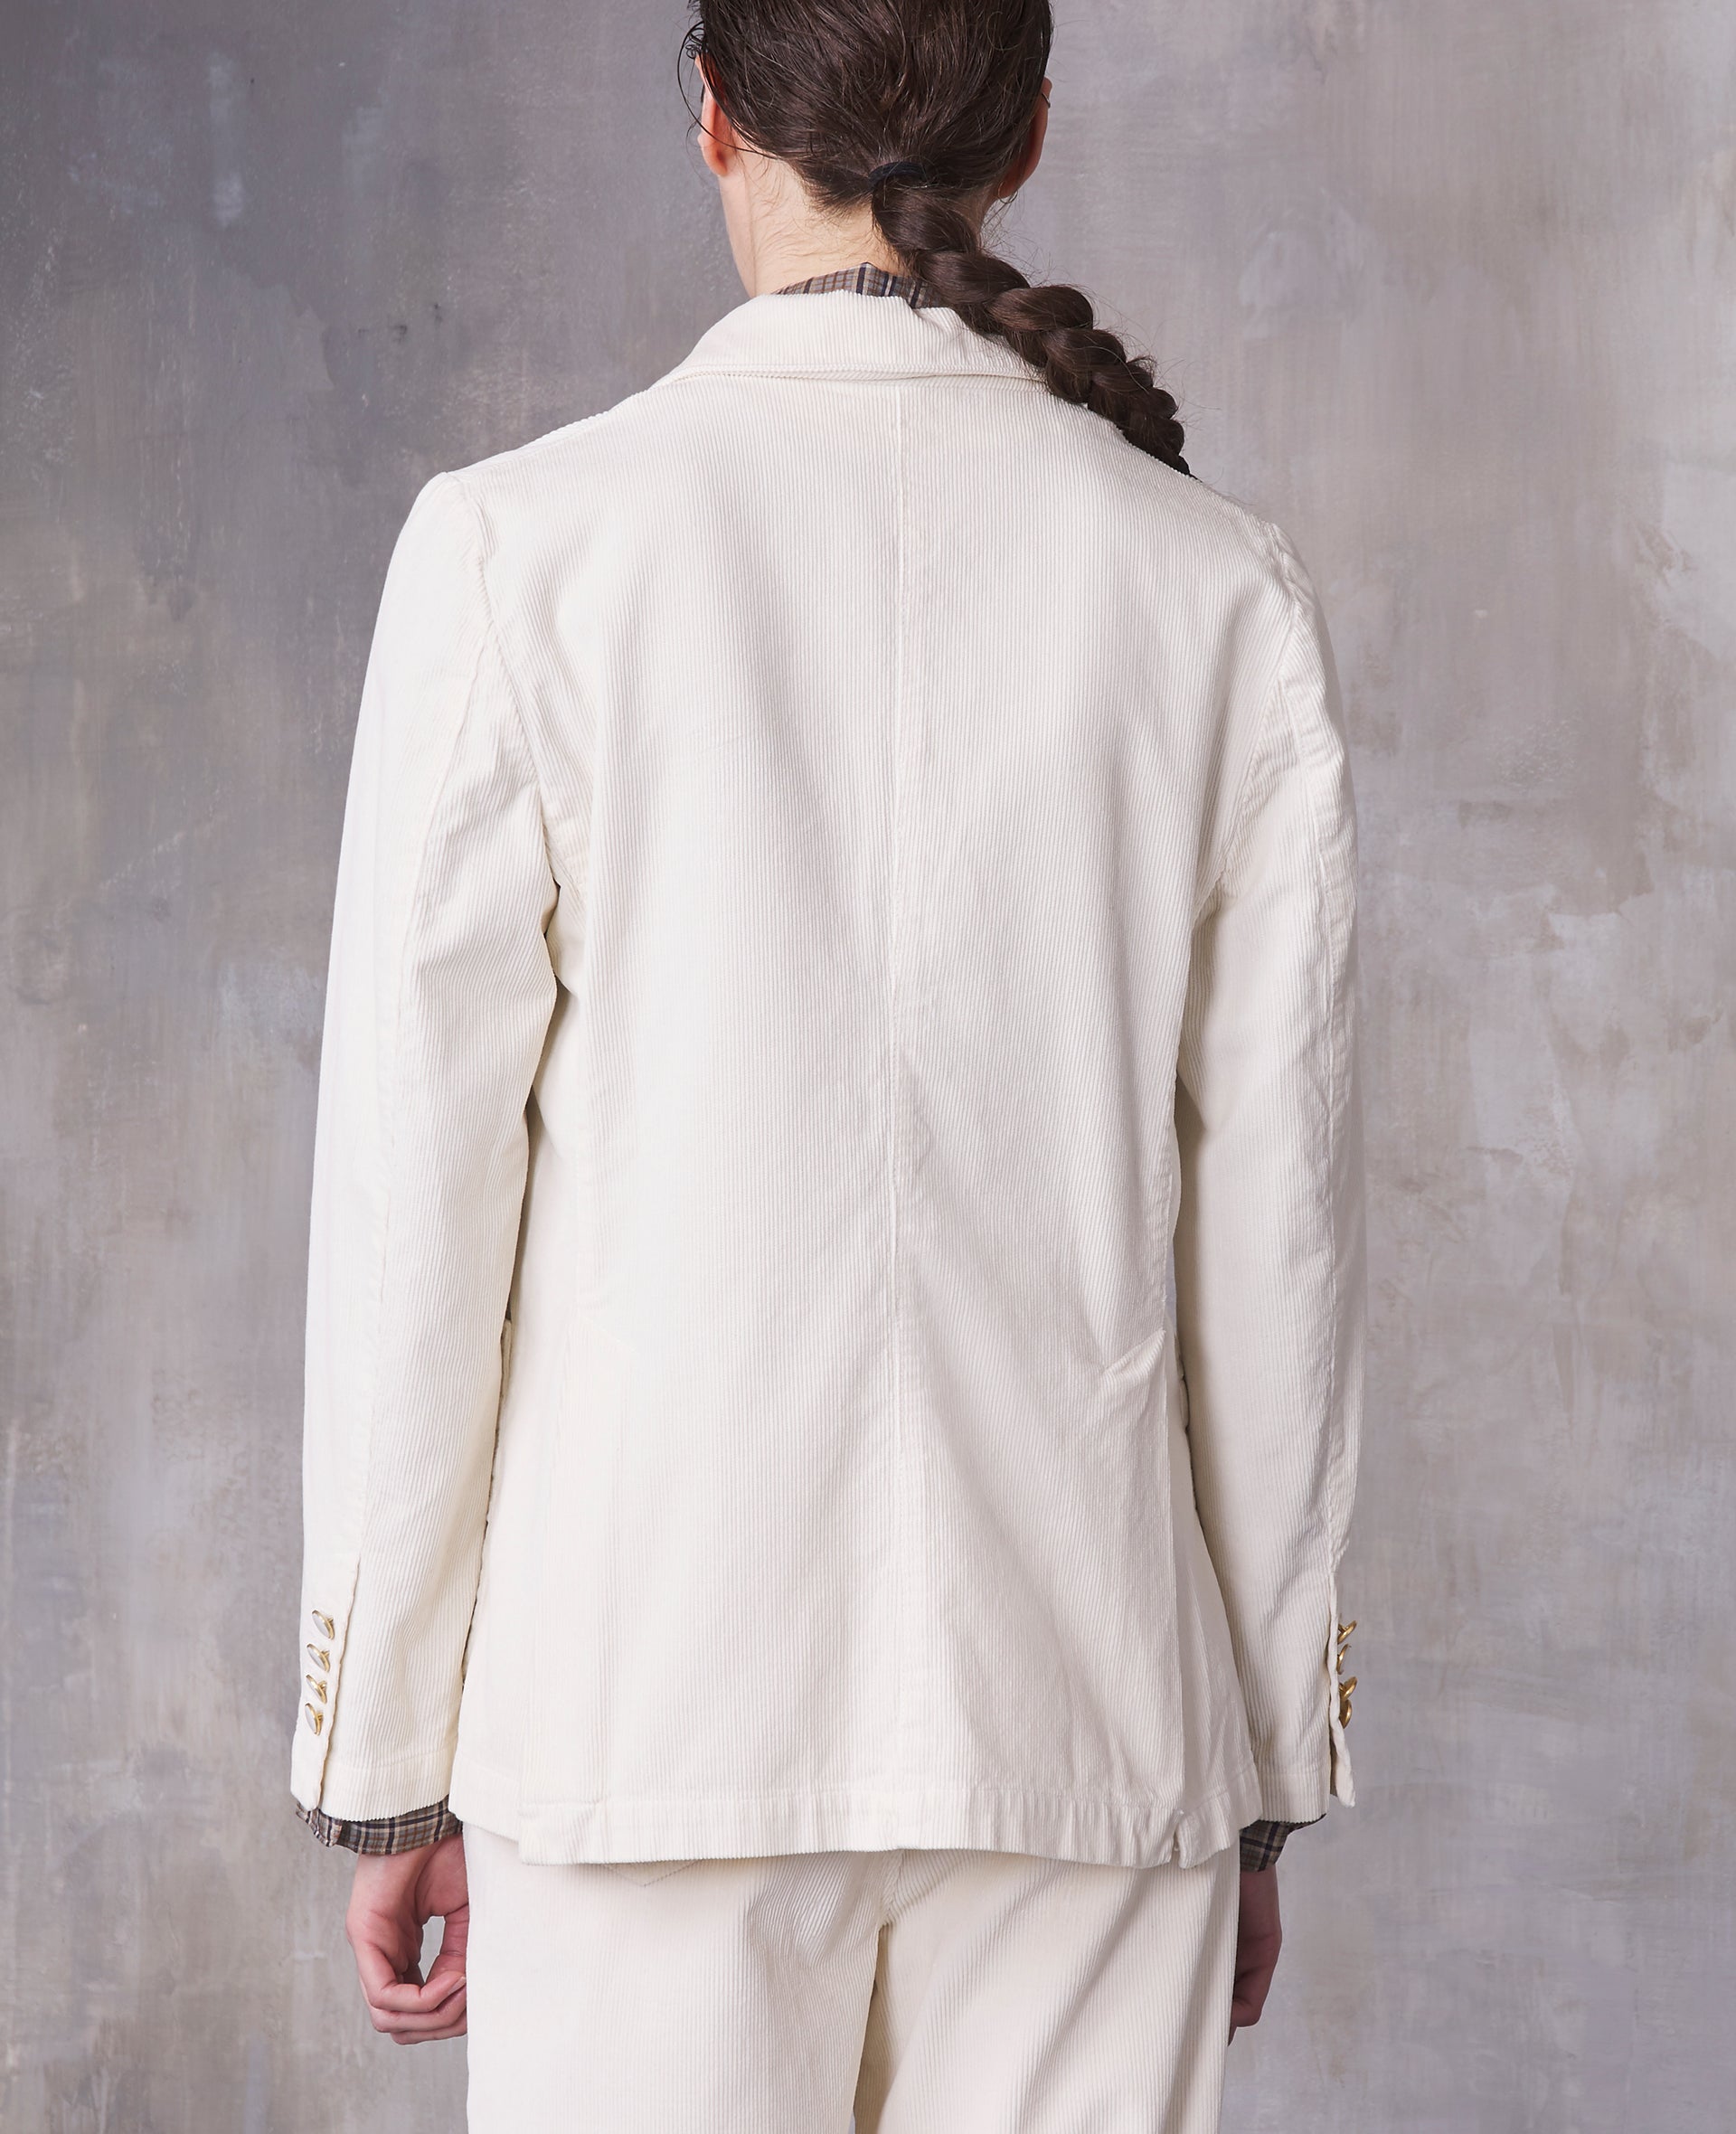 Valerianne jacket - Image 4